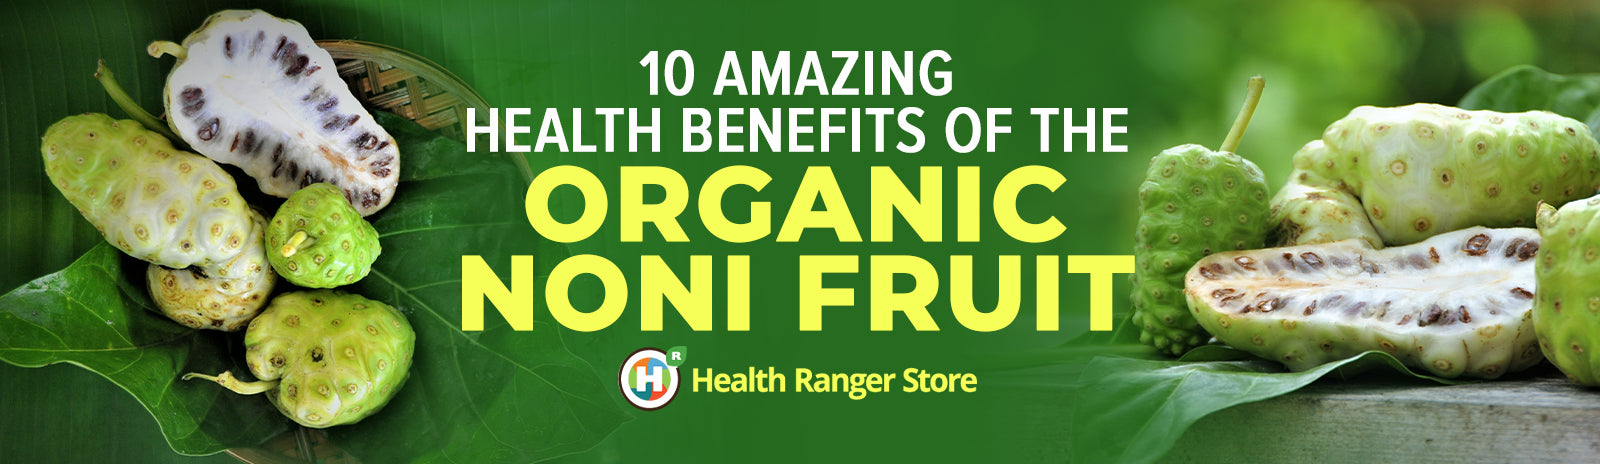 10 amazing health benefits of the organic noni fruit